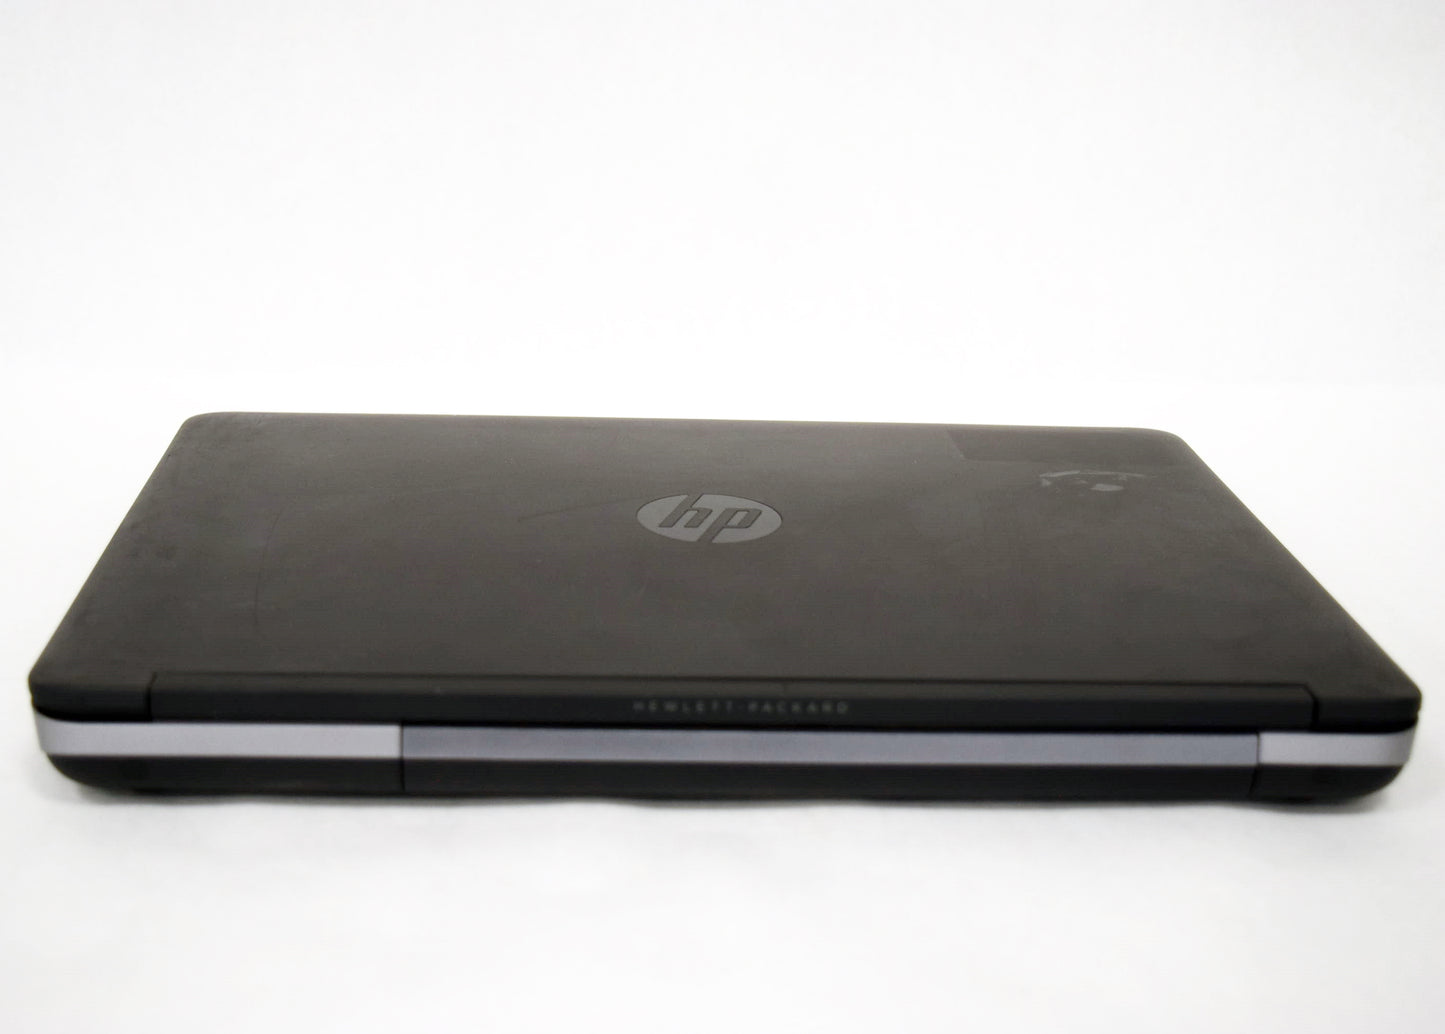 HP 640 G1 i5 4200M - 2.5GHz - 8GB RAM - 500GB HDD - 14" Screen - DVD - Windows10